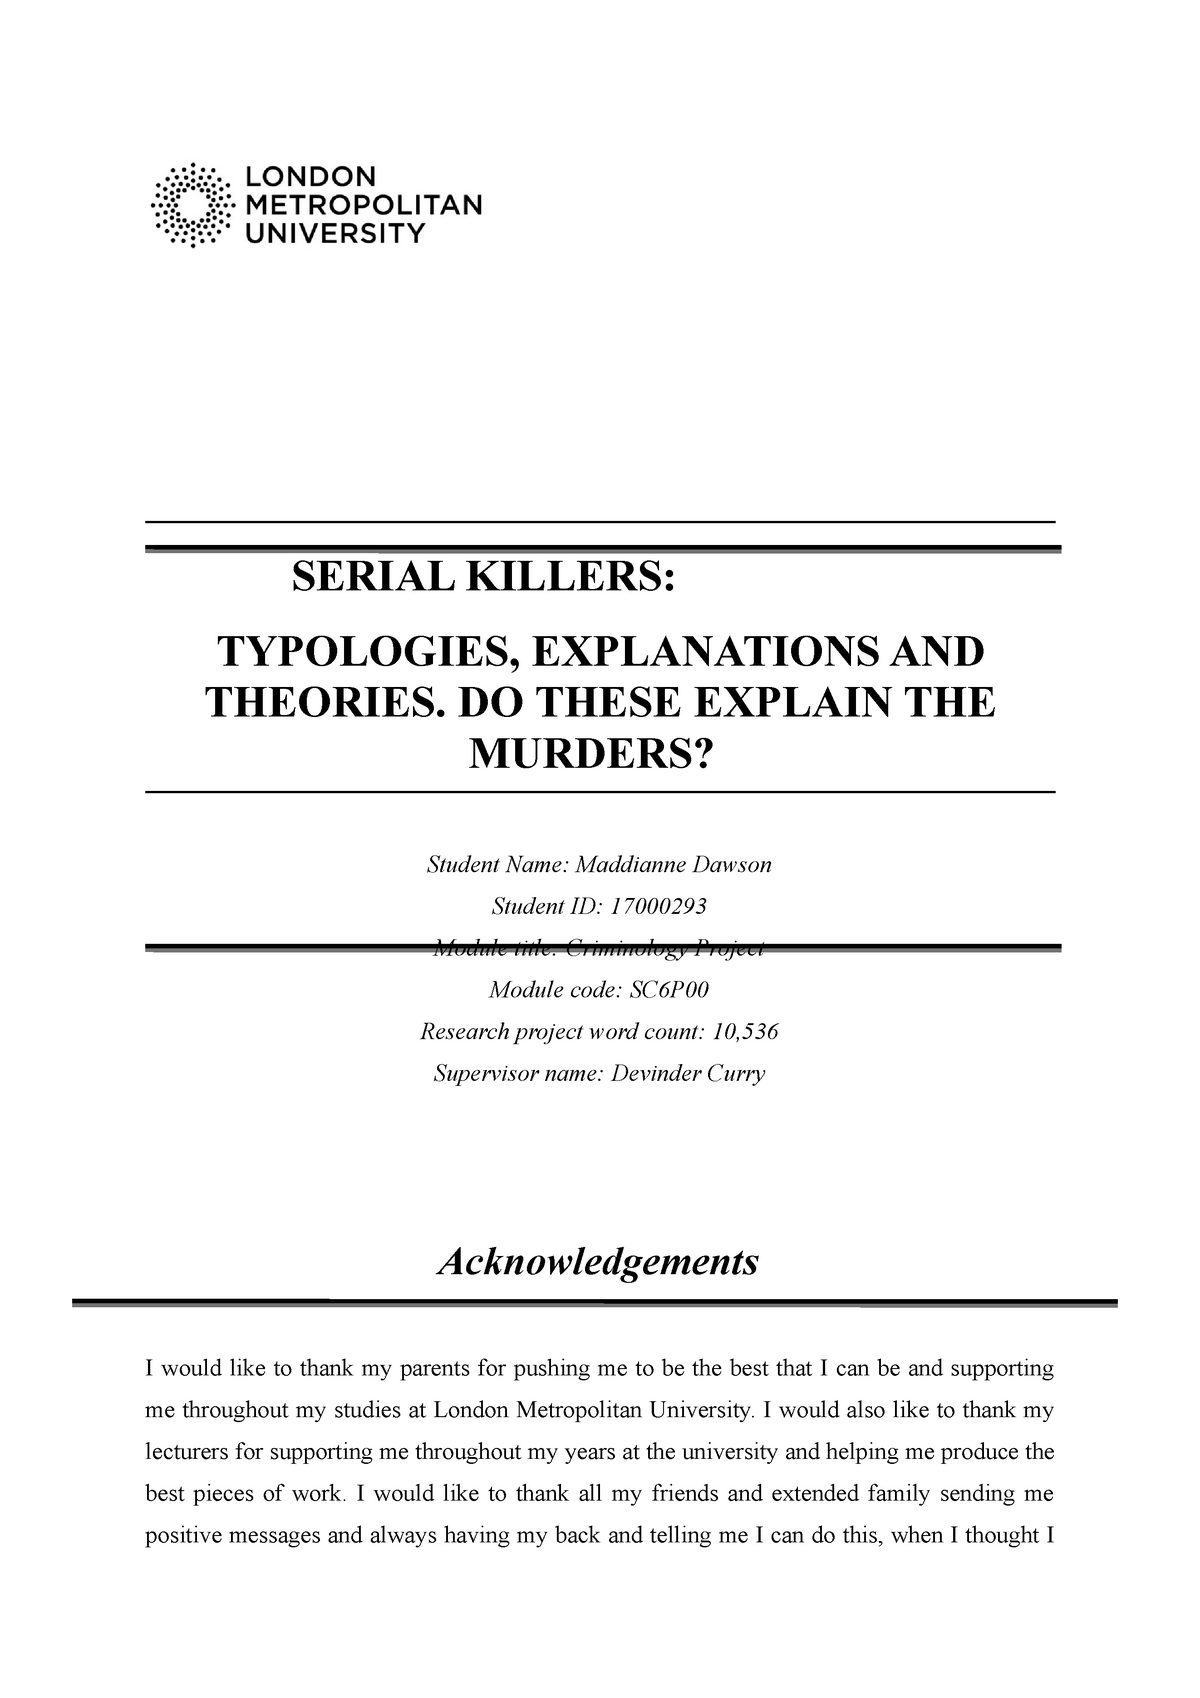 dissertation topics on serial killers